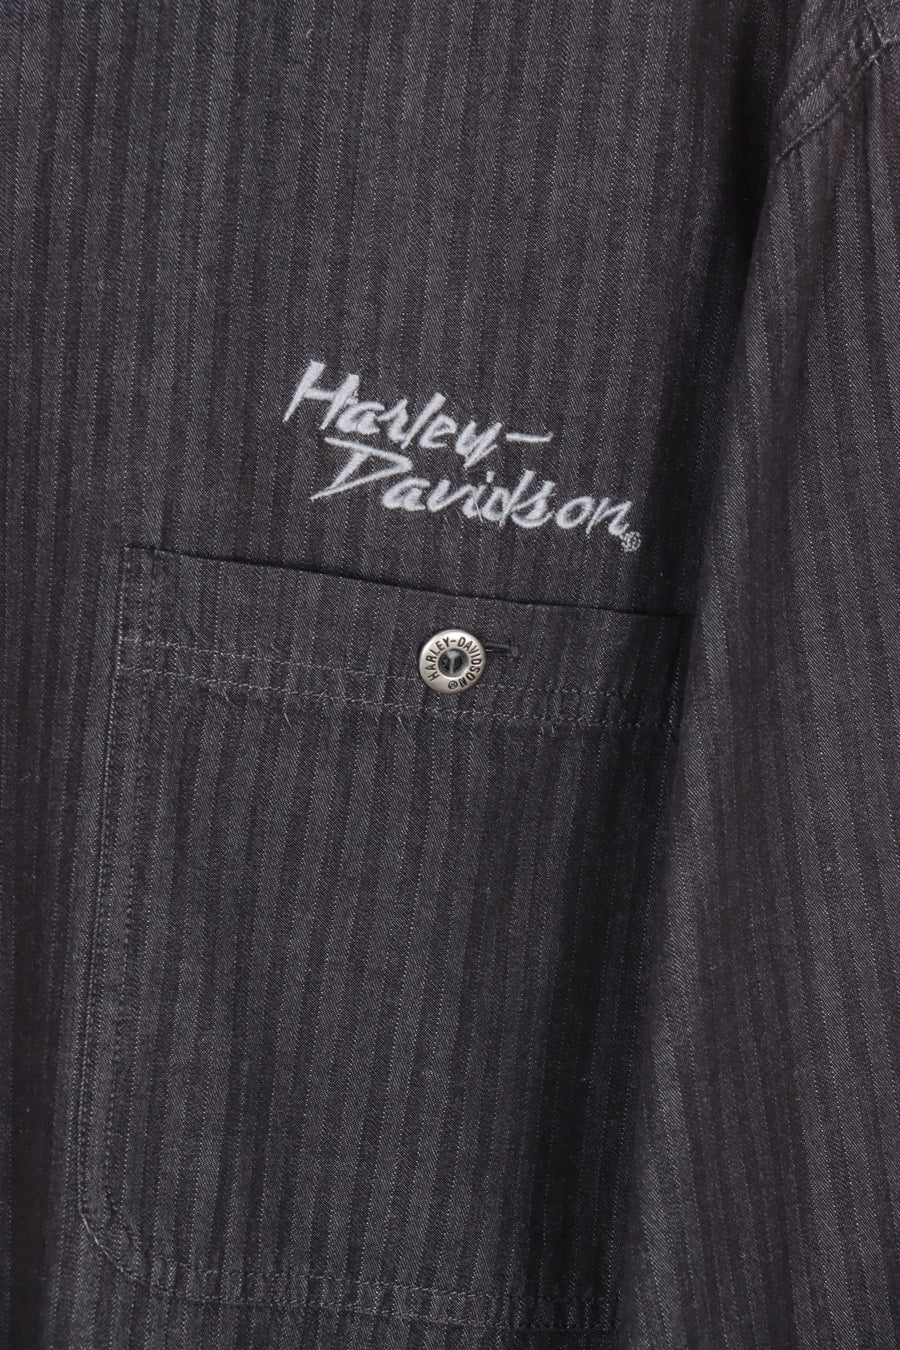 HARLEY DAVIDSON Embroidered Grey Striped Long Sleeve Shirt (XXL)